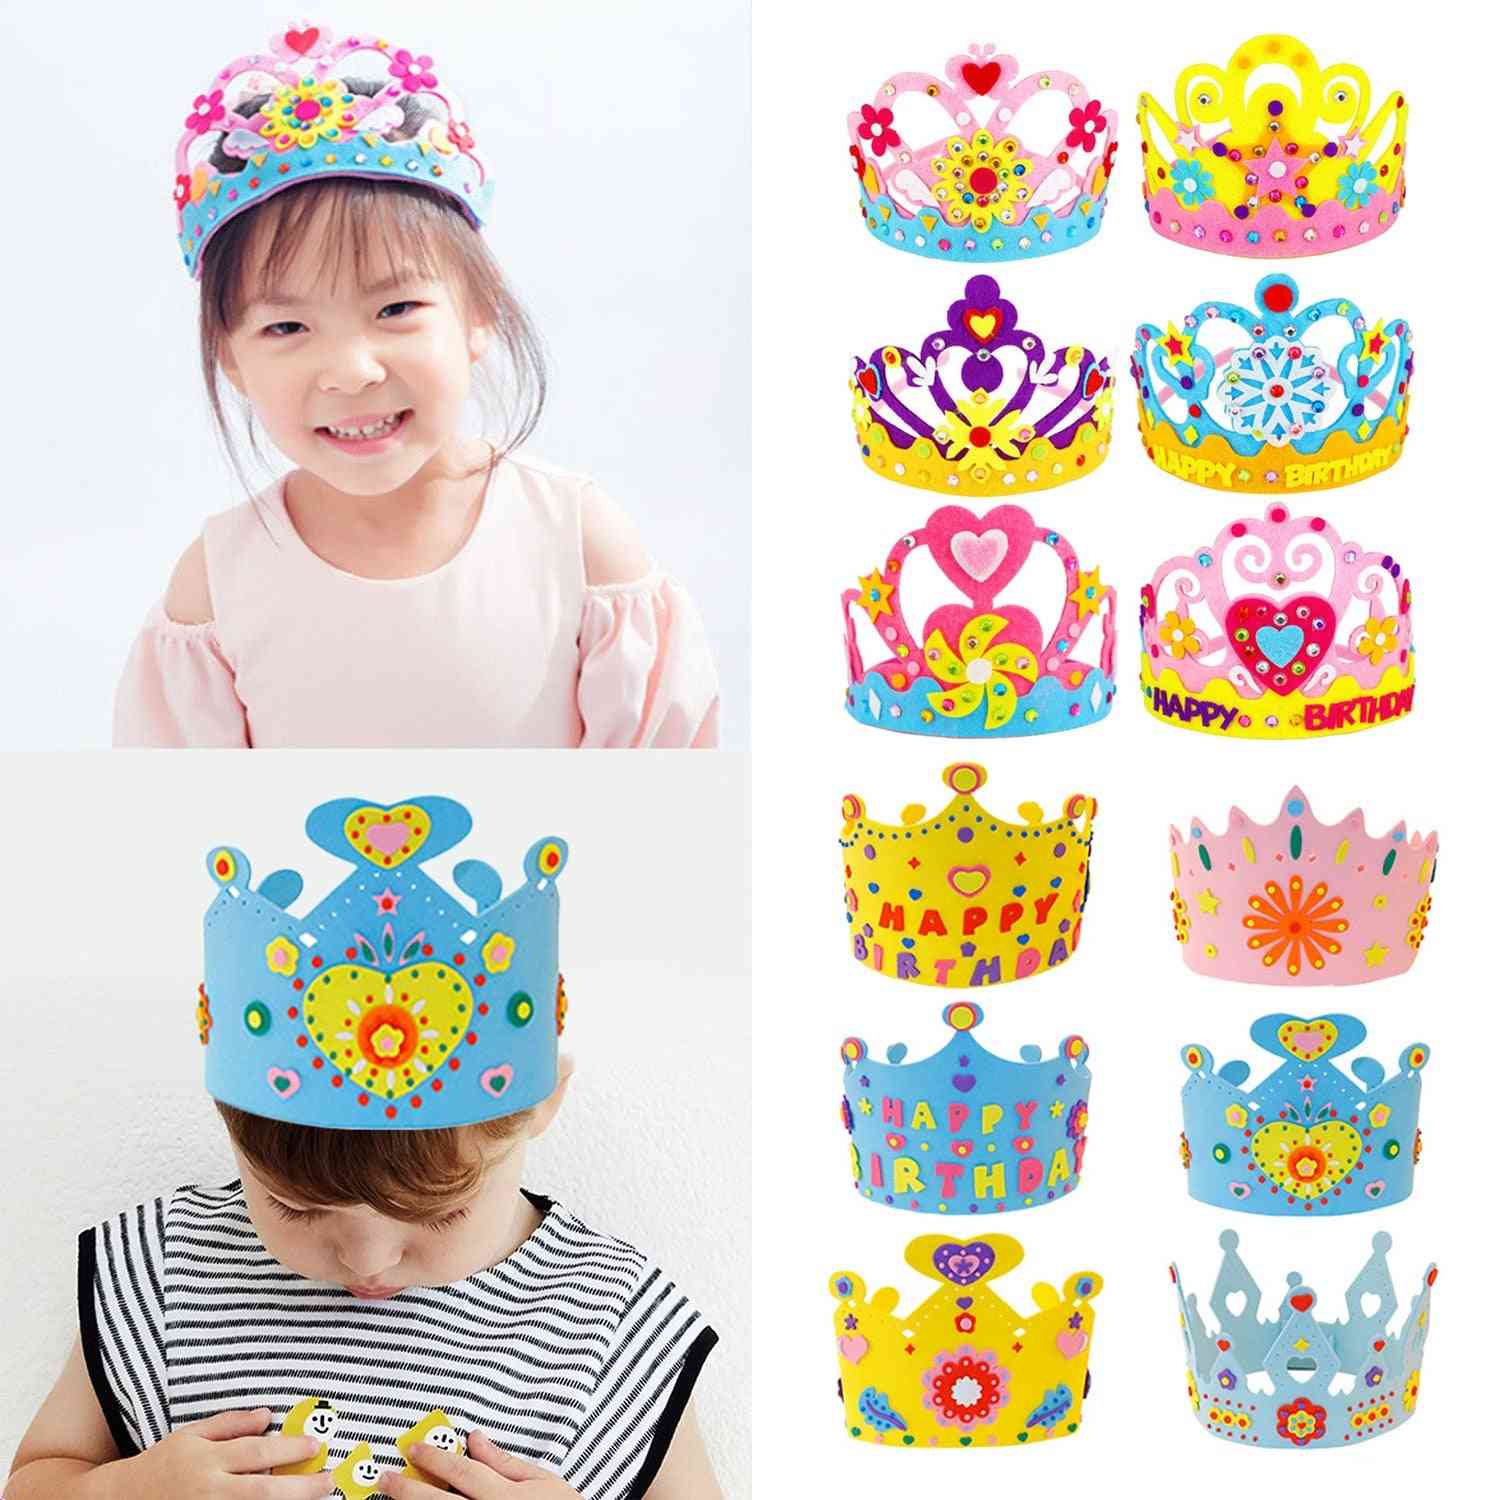 Handmade Crown Kit Diy Birthday Tiaras Hat Material Set Crafts Boy Girl Toddlers Random Style